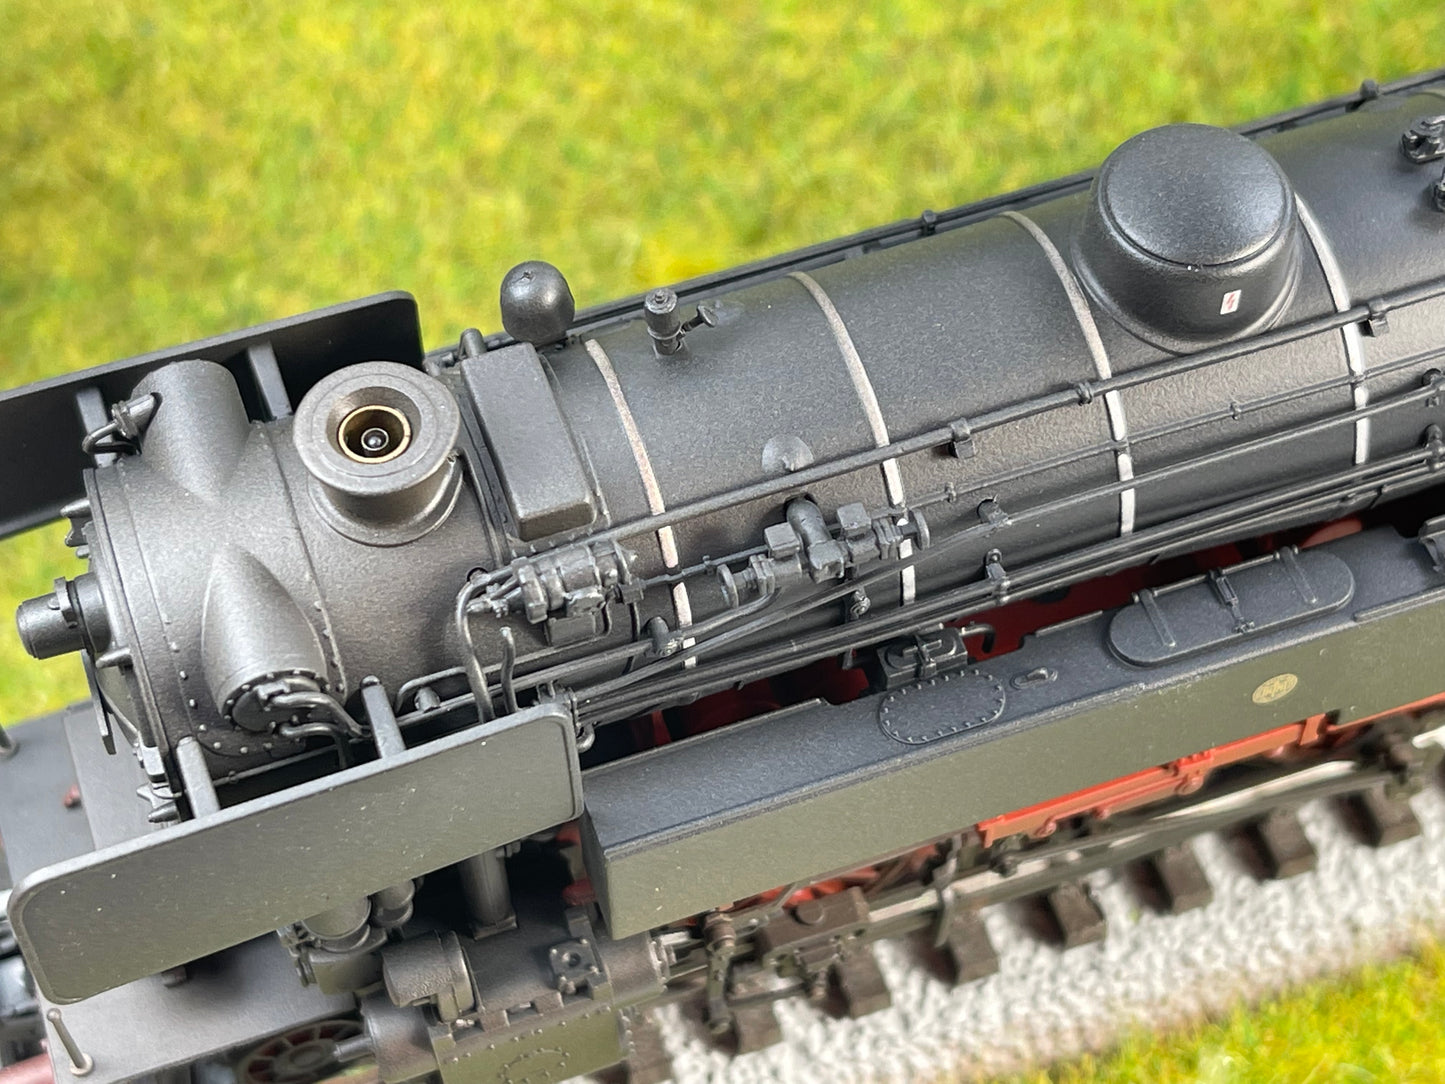 Trix 22664 - Class 065 Steam Locomotive